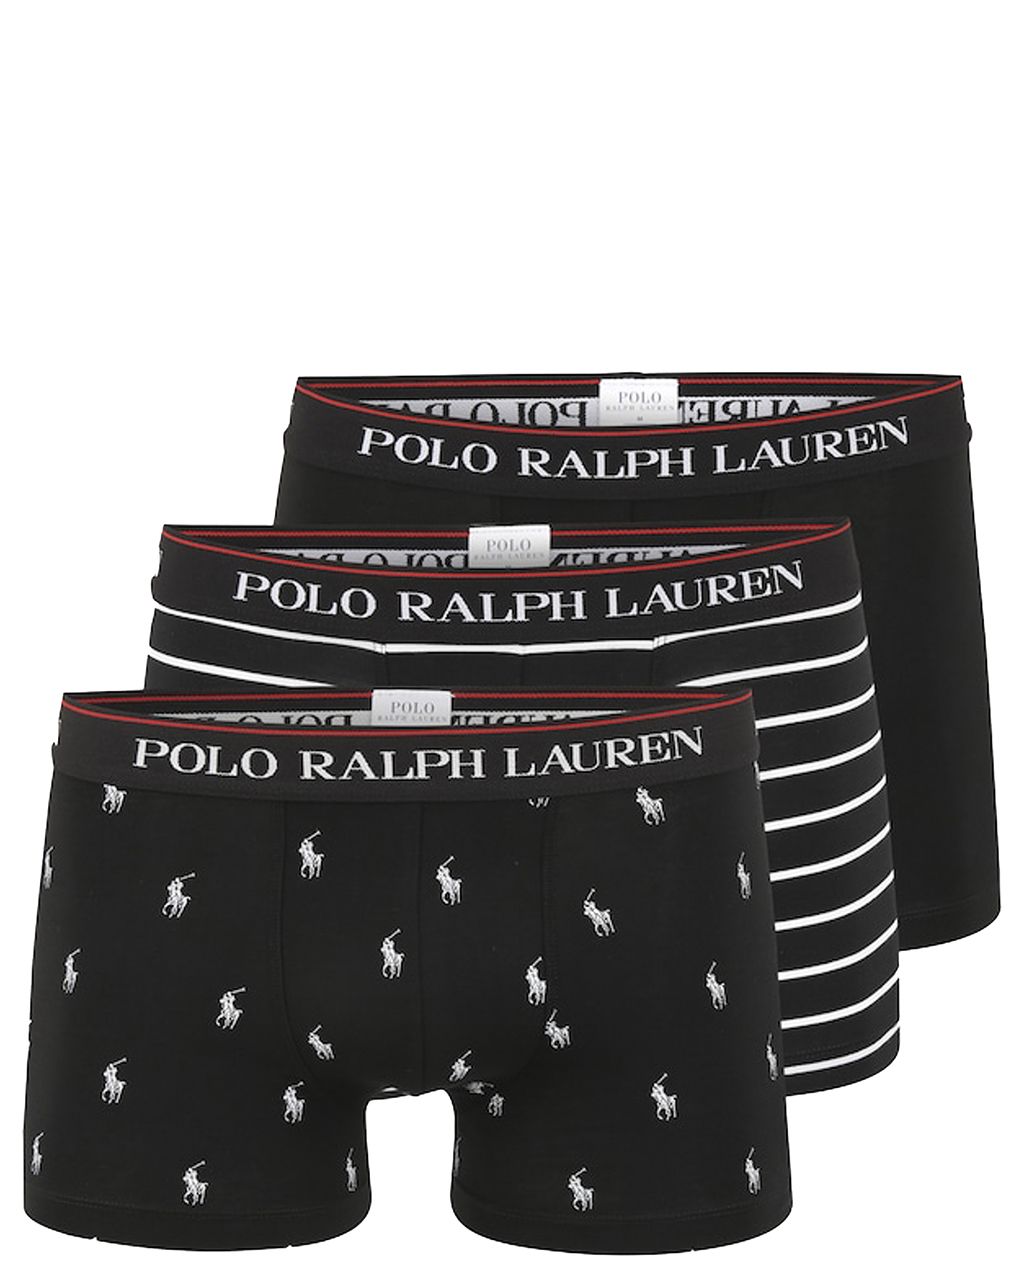 Polo Ralph Lauren - Boxershort Zwart dessin 078599-001-L